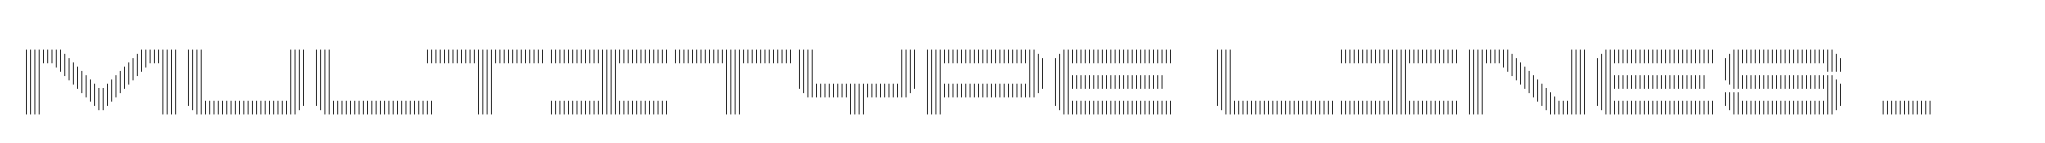 MultiType Lines Loose 3 image